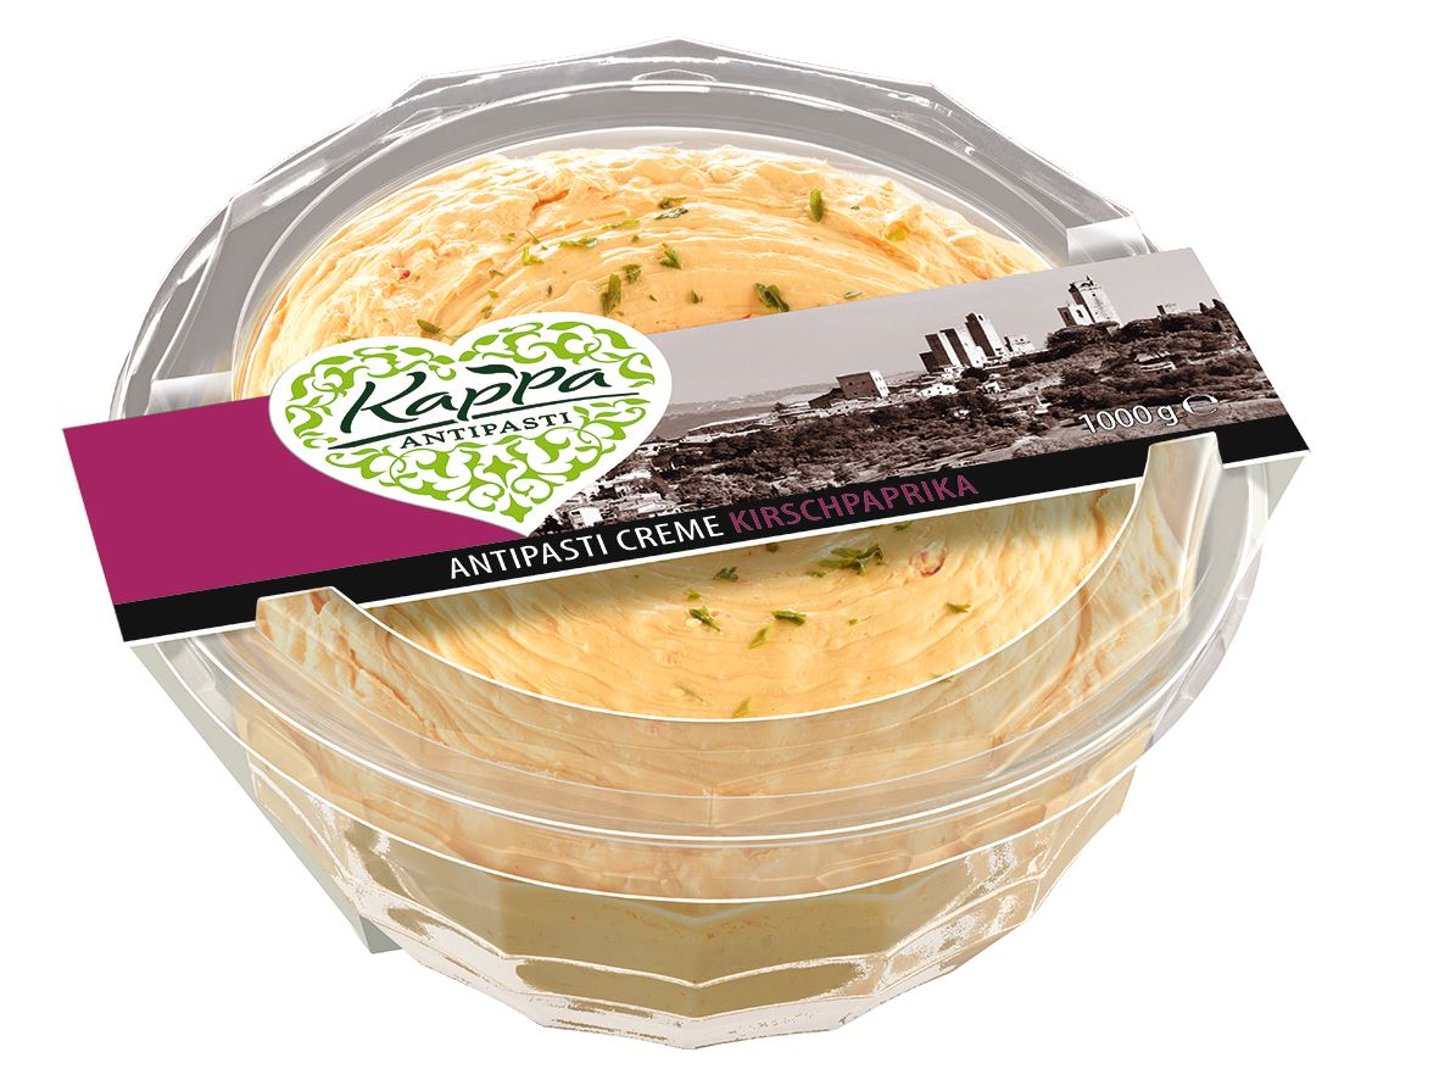 Kappa - Antipasti Creme Kirschpaprika gekühlt - 1 kg Packung